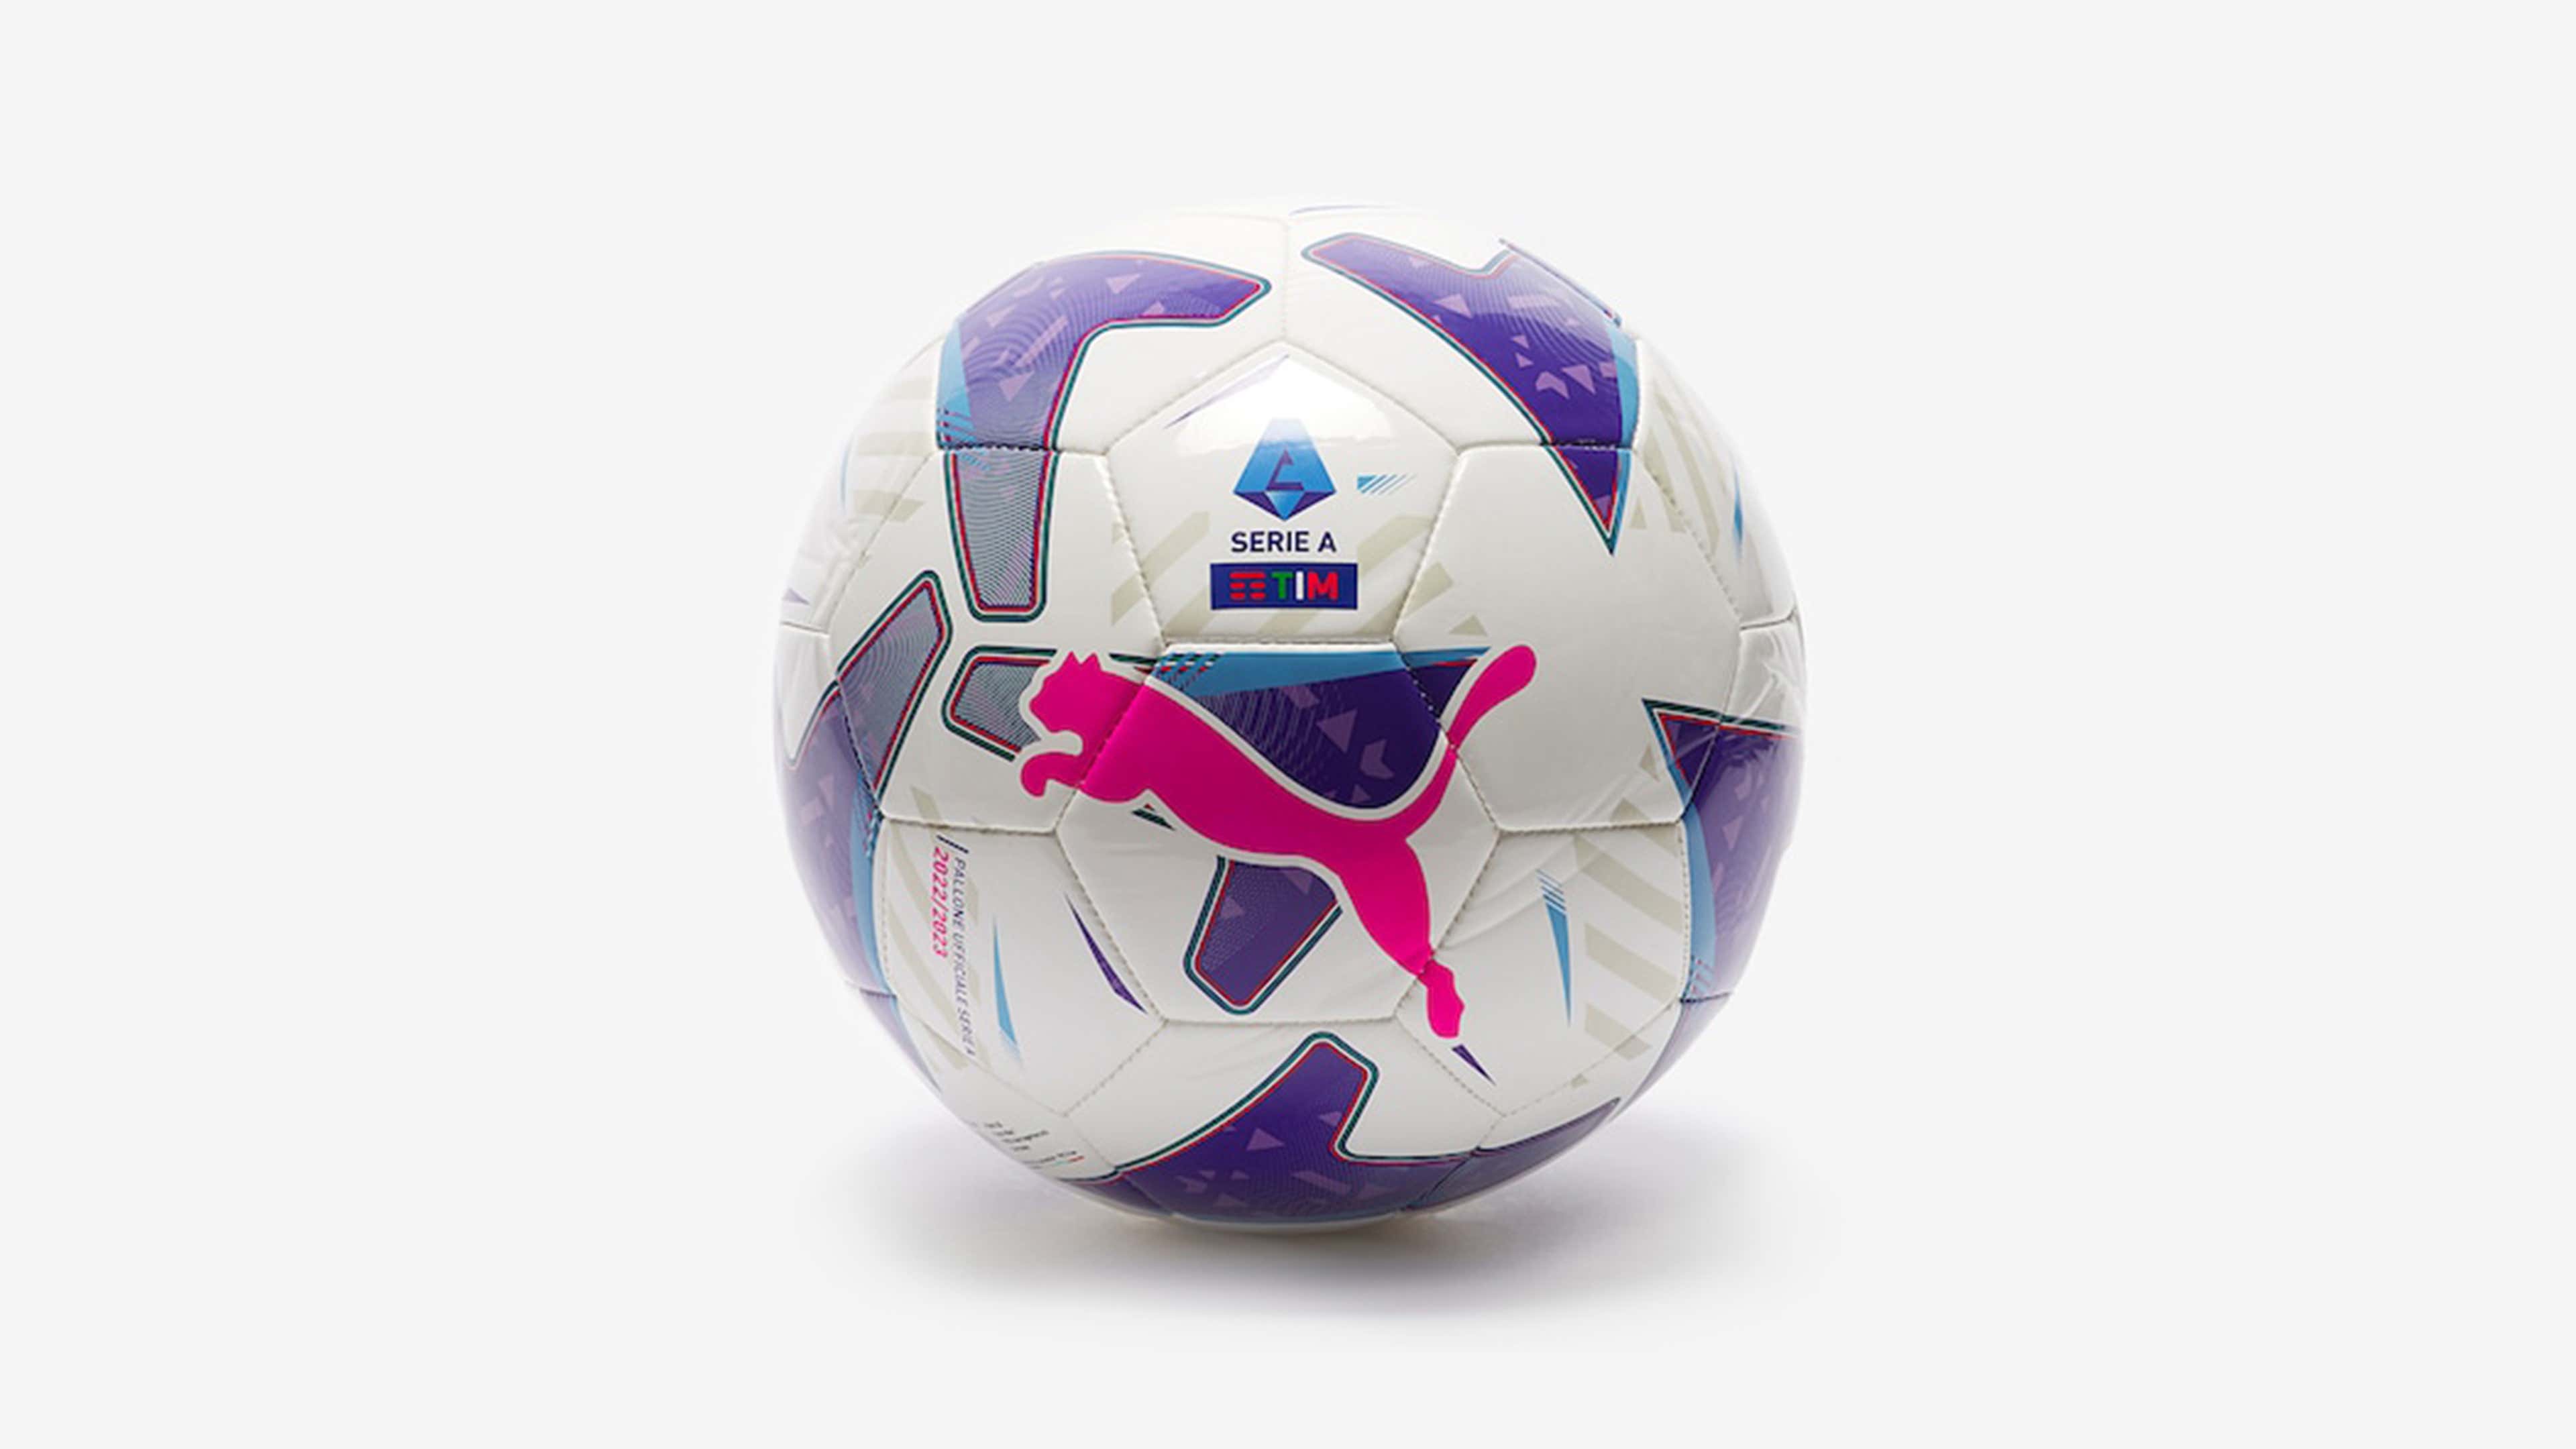 Результаты crystal ball 2024. Puma orbita serie a. Serie a Ball 2024. Футбольный мяч Puma orbita serie a. Футбольный мяч 2024.